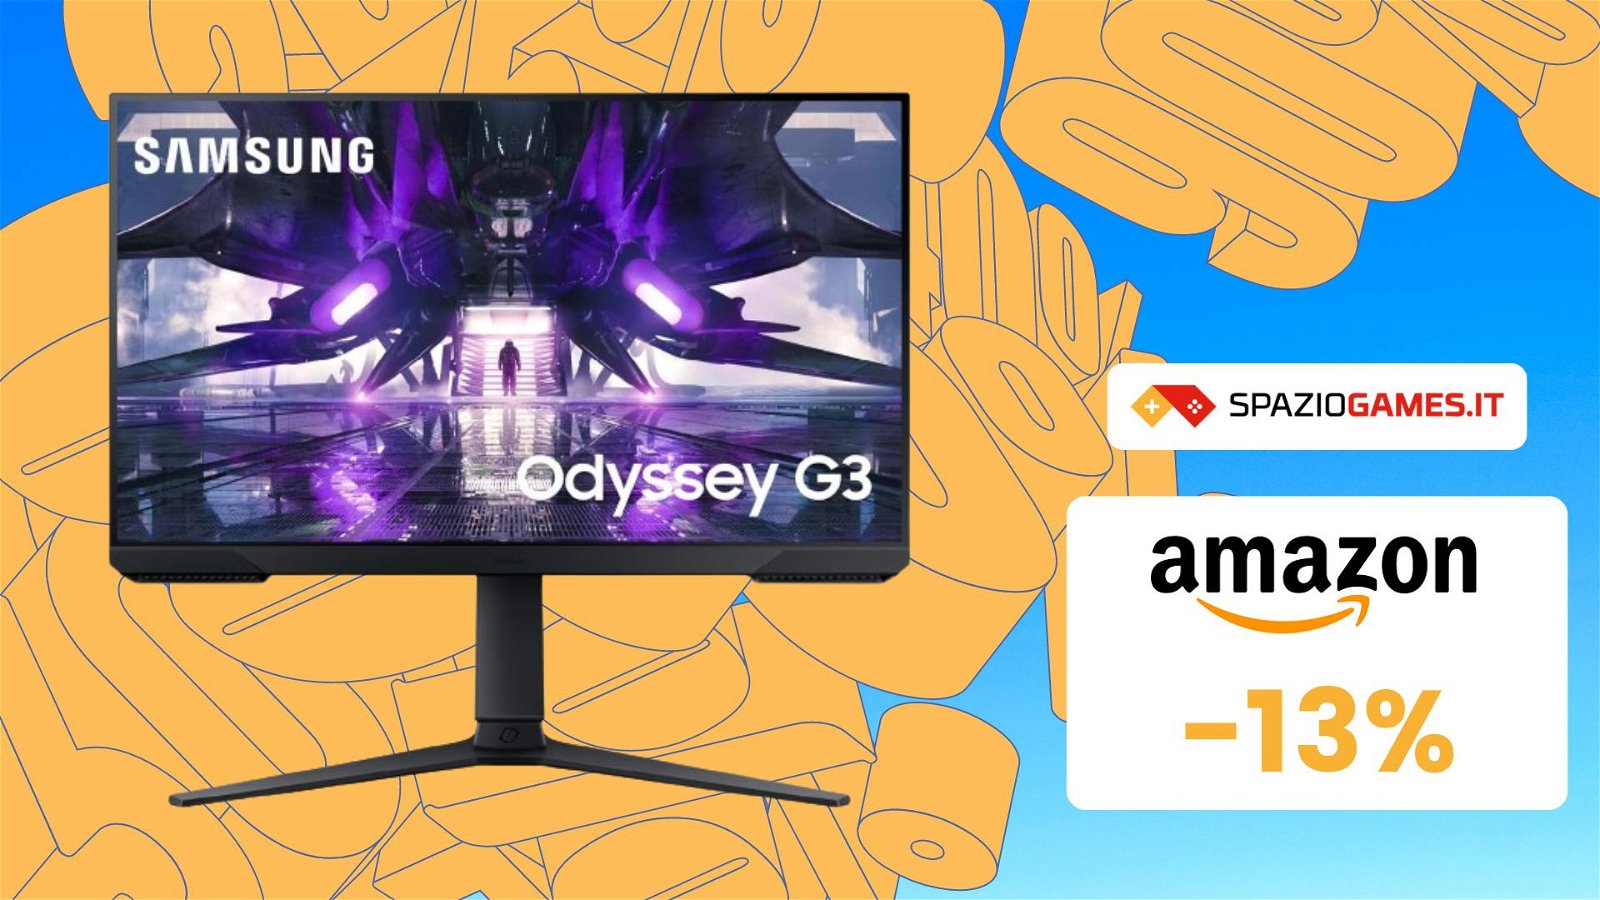 Samsung Odyssey G3, OTTIMO monitor gaming da 24", oggi al MINIMO STORICO! -13%